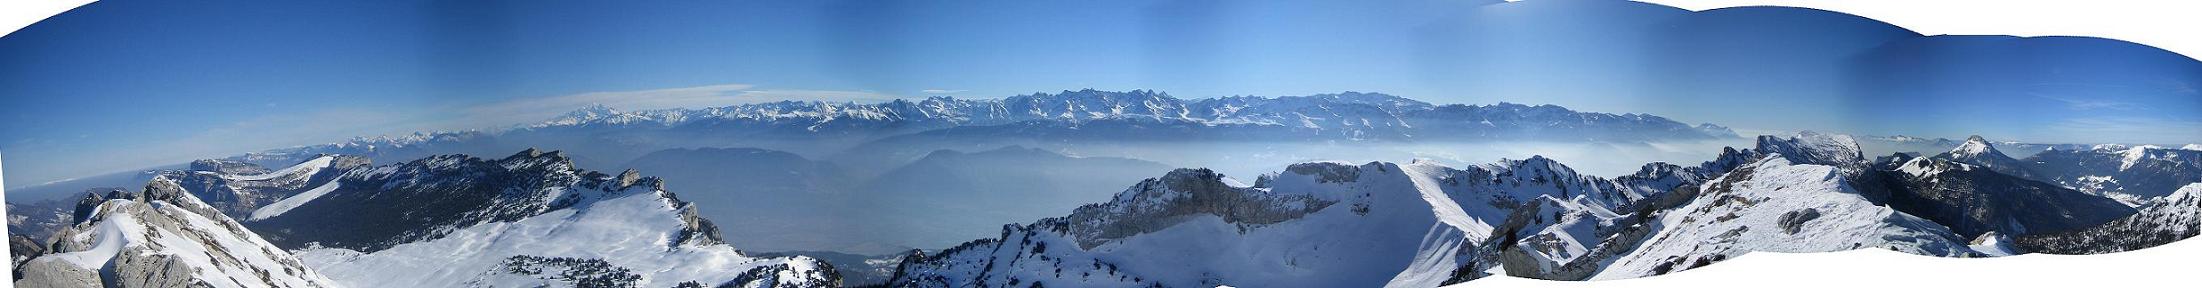 Panorama lances de malissard : vue du sommet